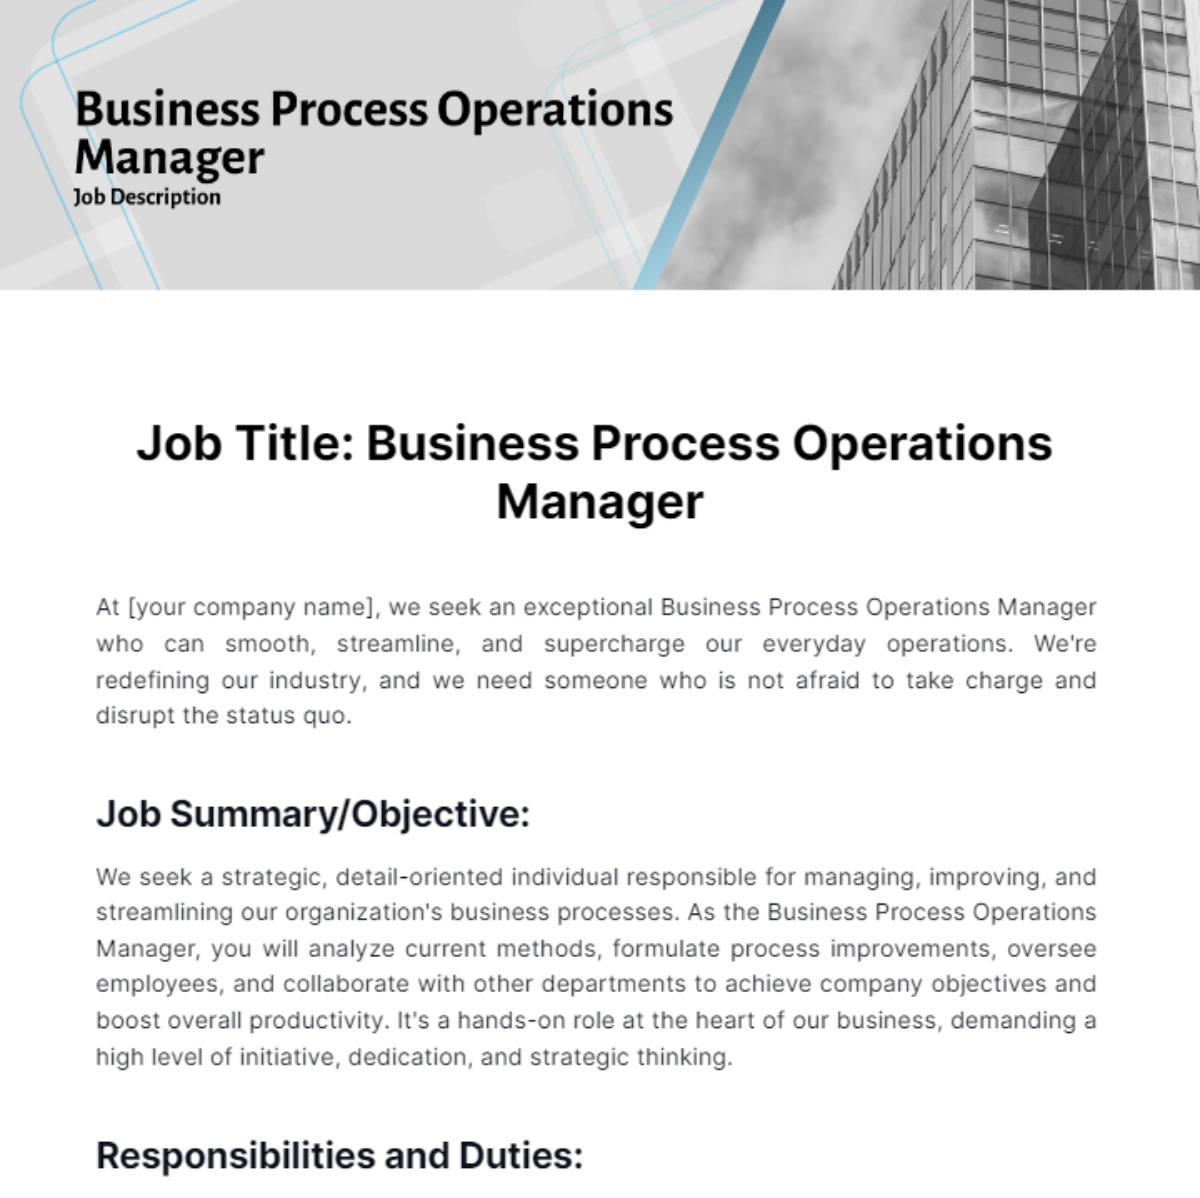 Business Process Operations Manager Job Description Template